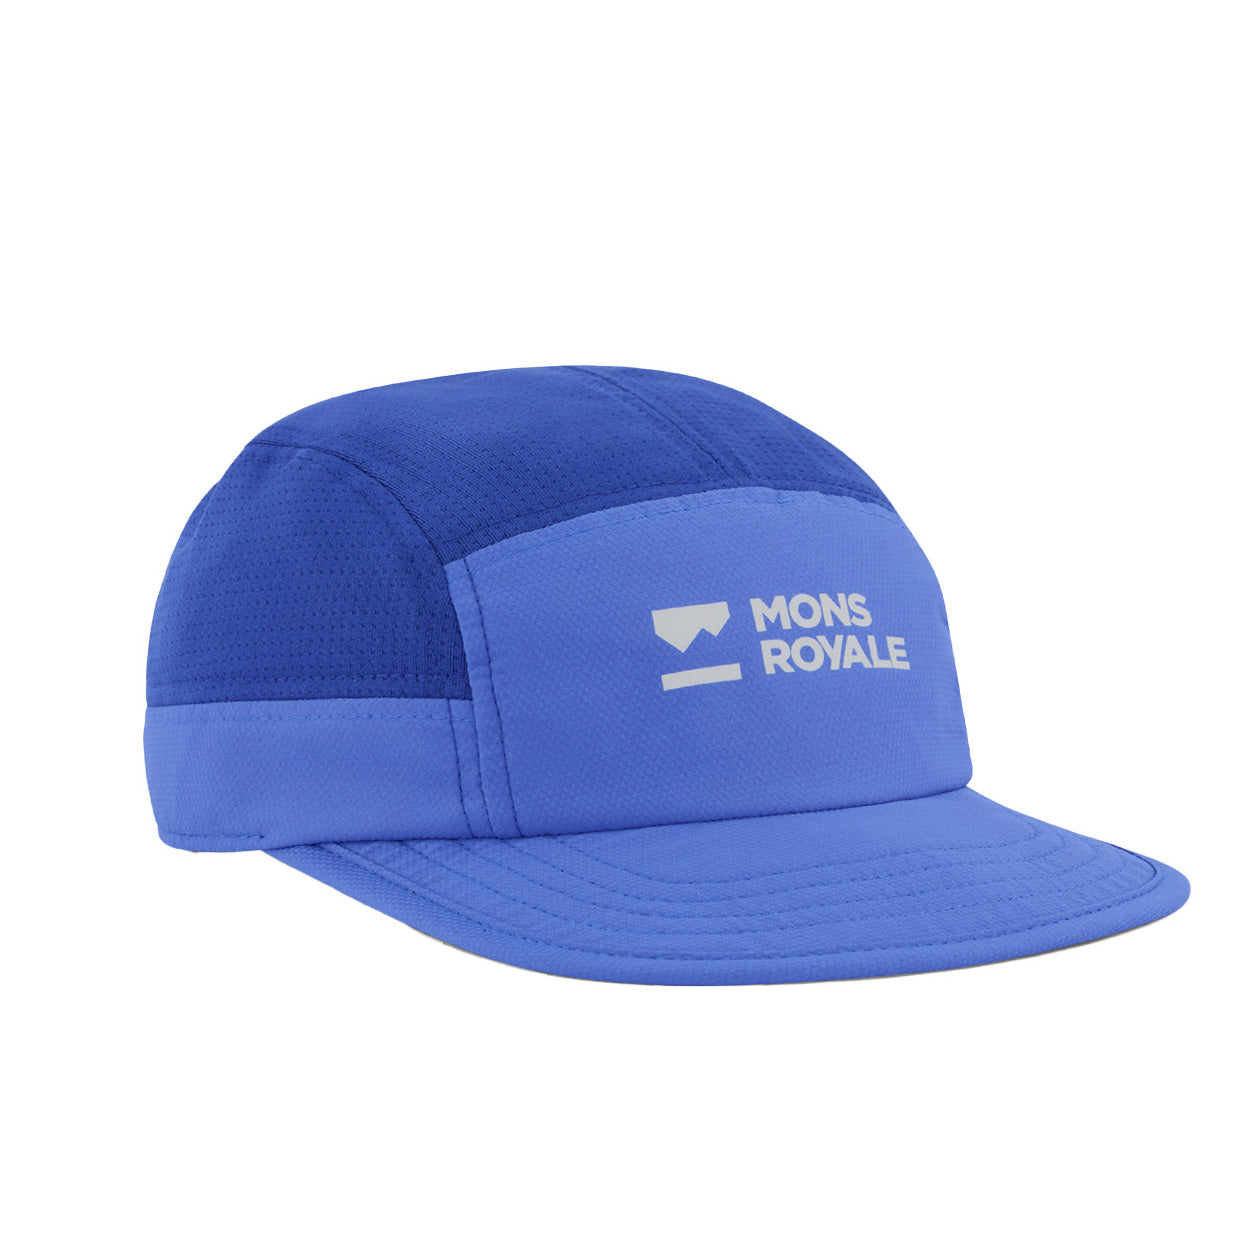 Mons Royale Velocity Trail Cap - One Size Fits Most - Pop Blue - Image 1